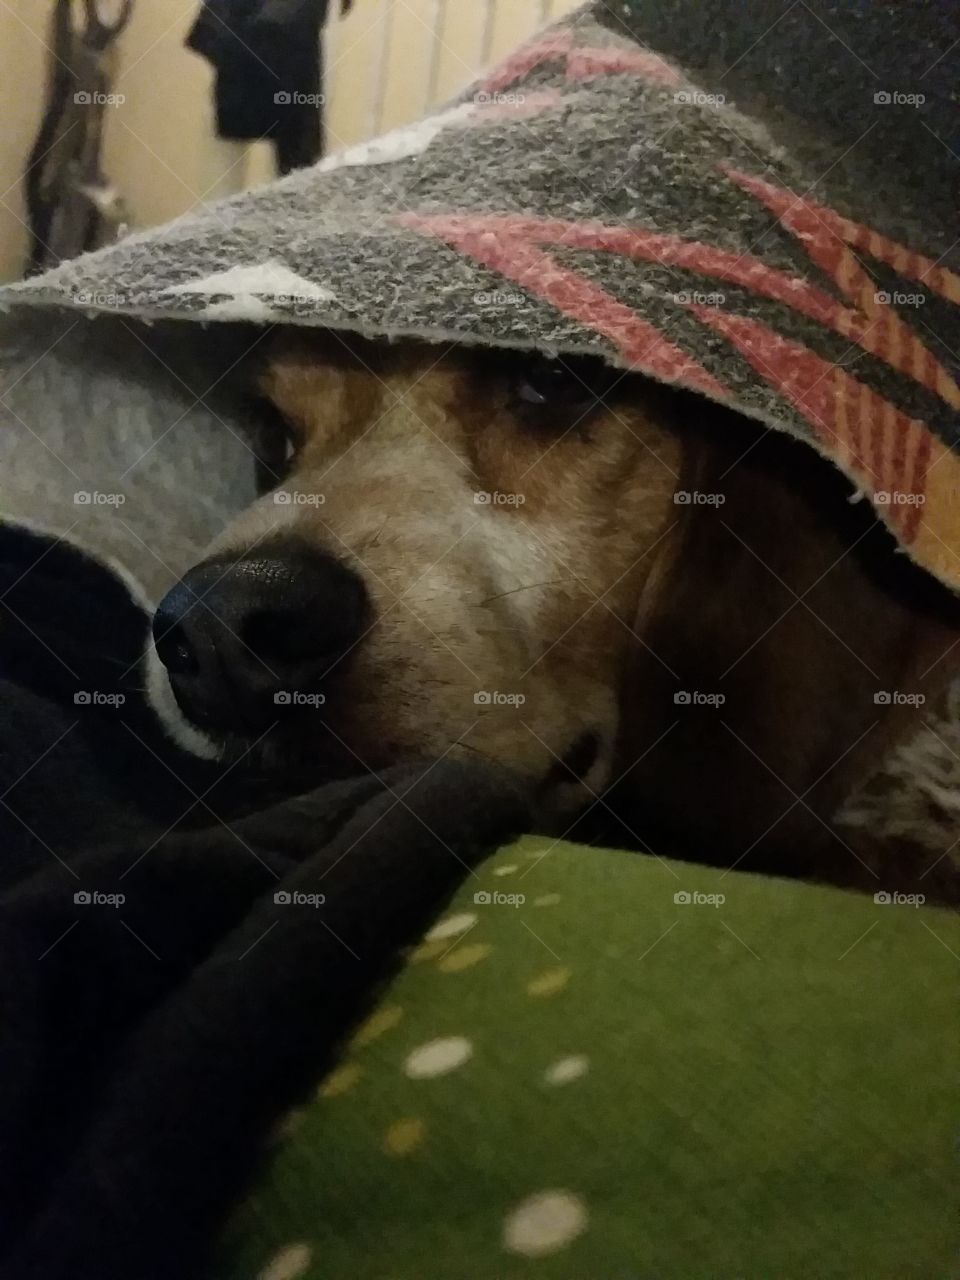 Snuggle Beagle Under the Blanket